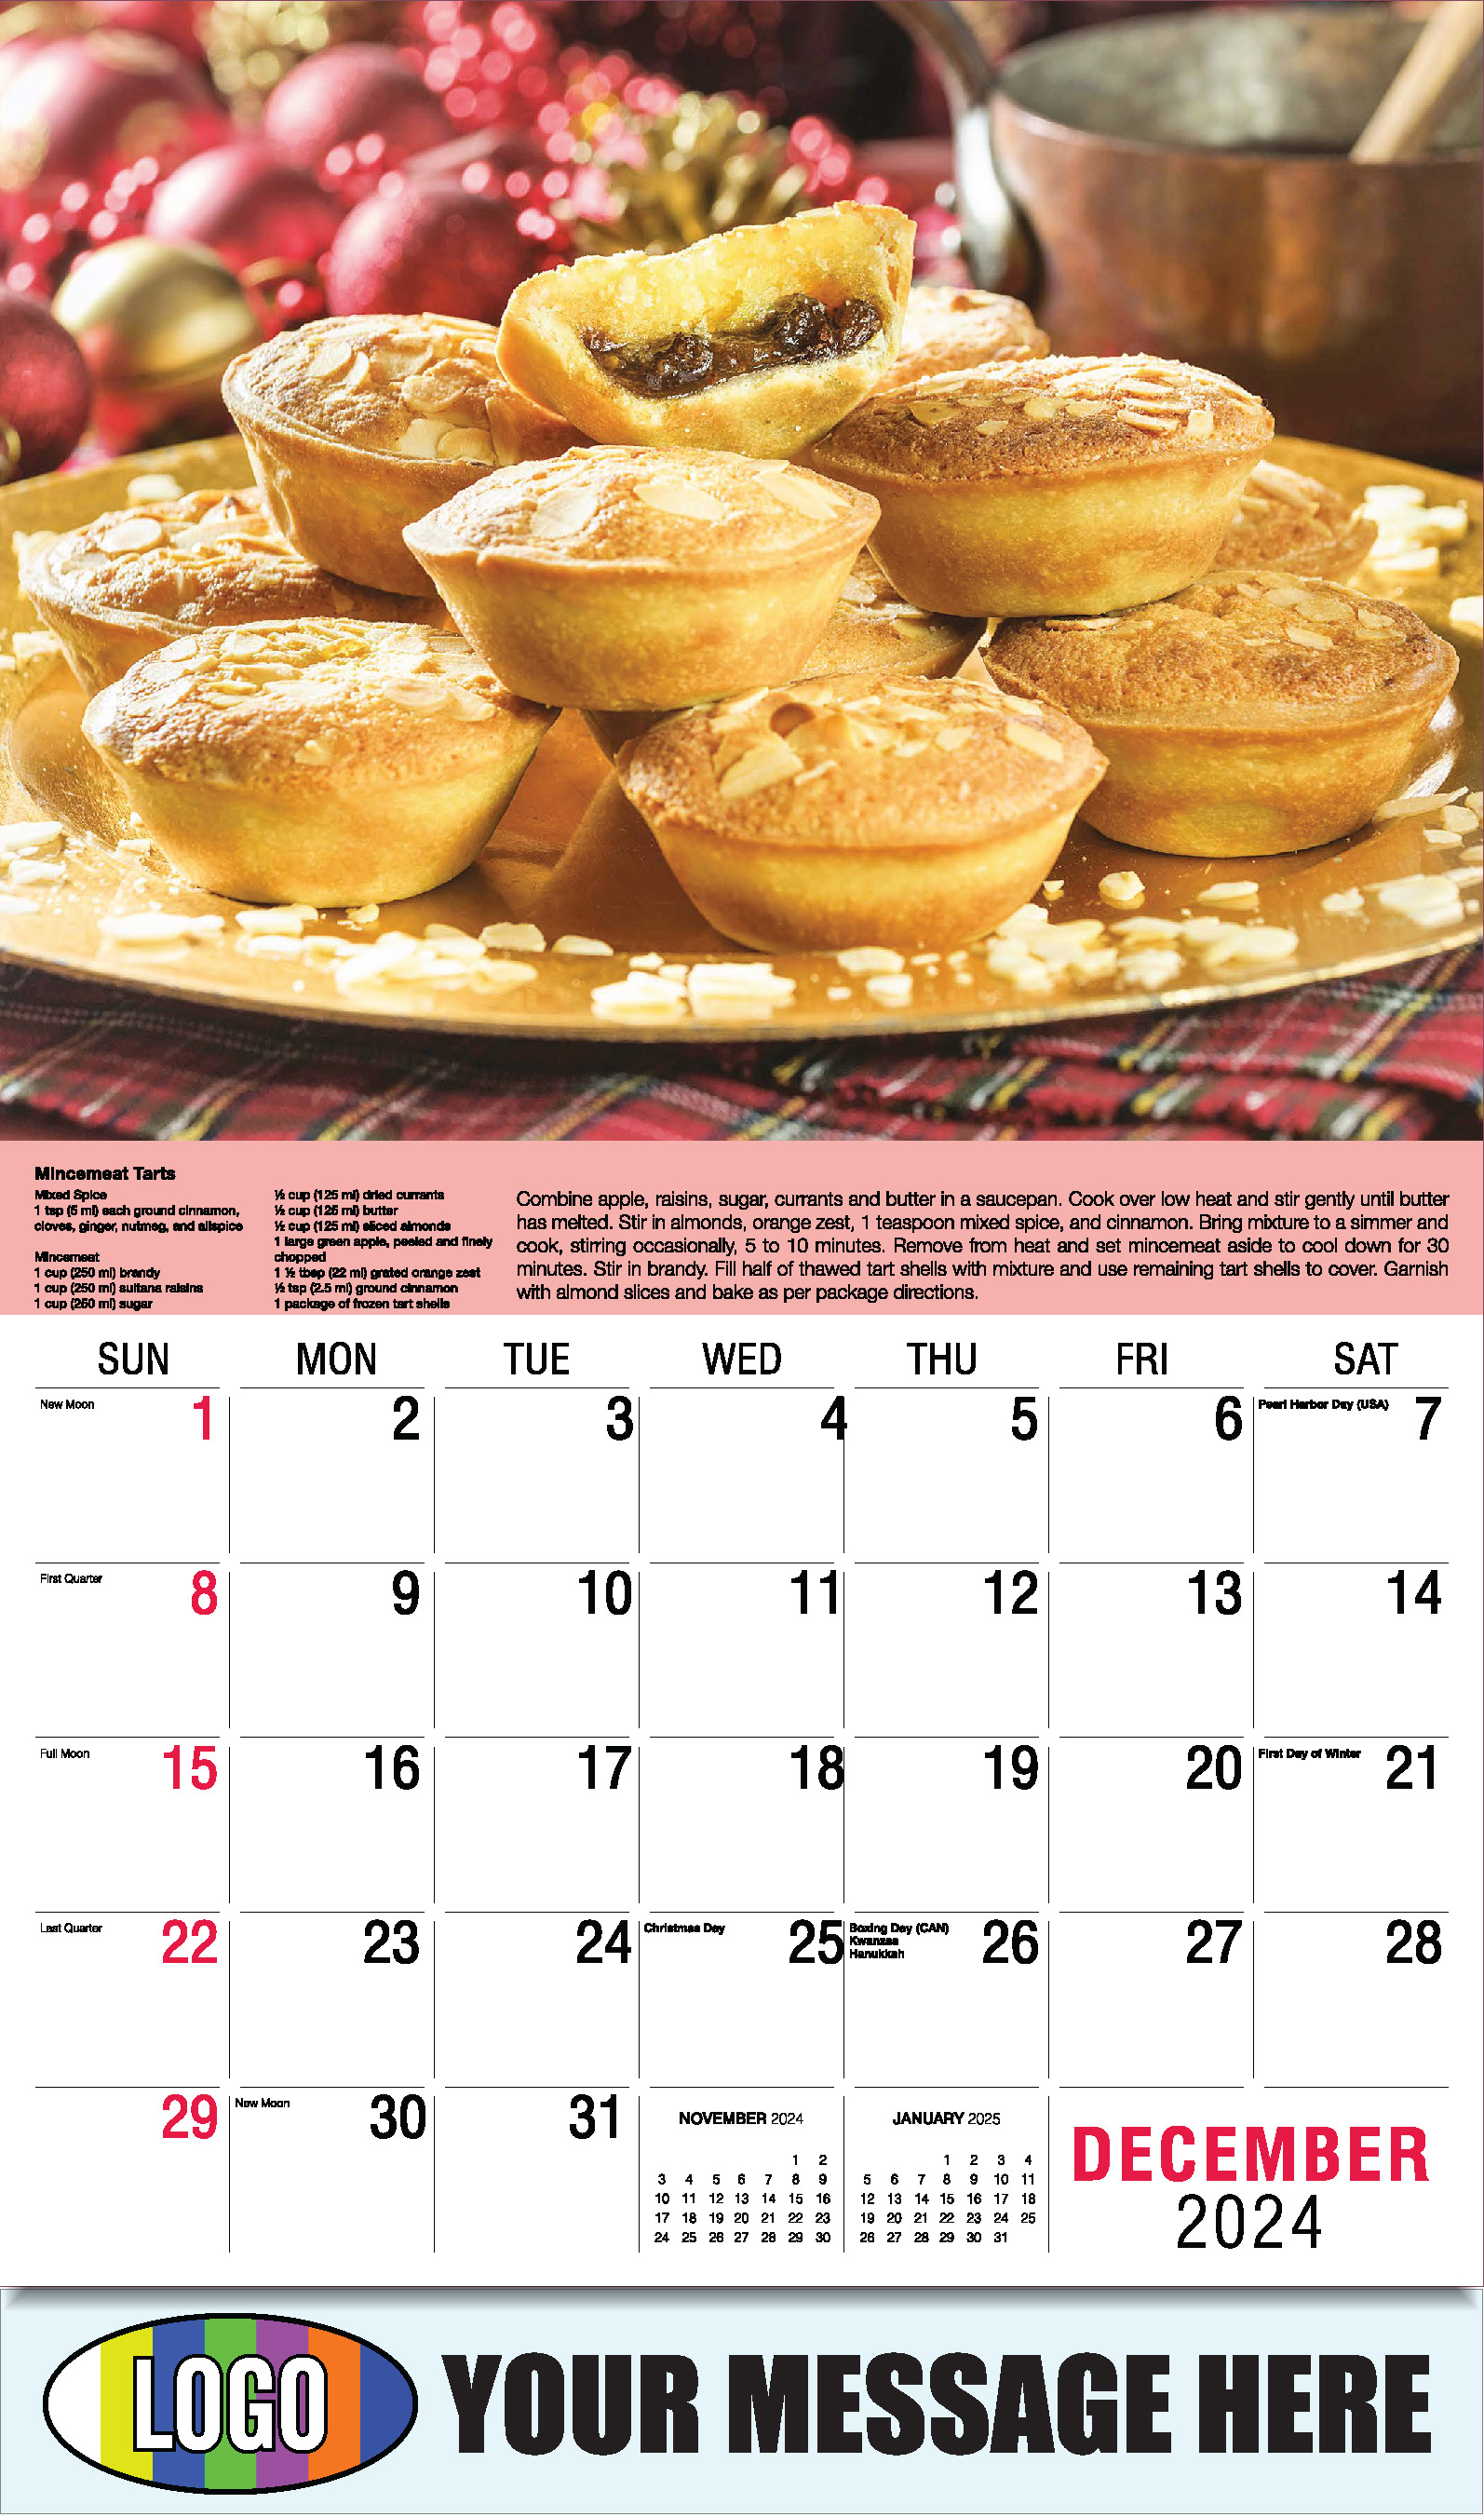 Recipes 2025 Business Promotional Calendar - December_a